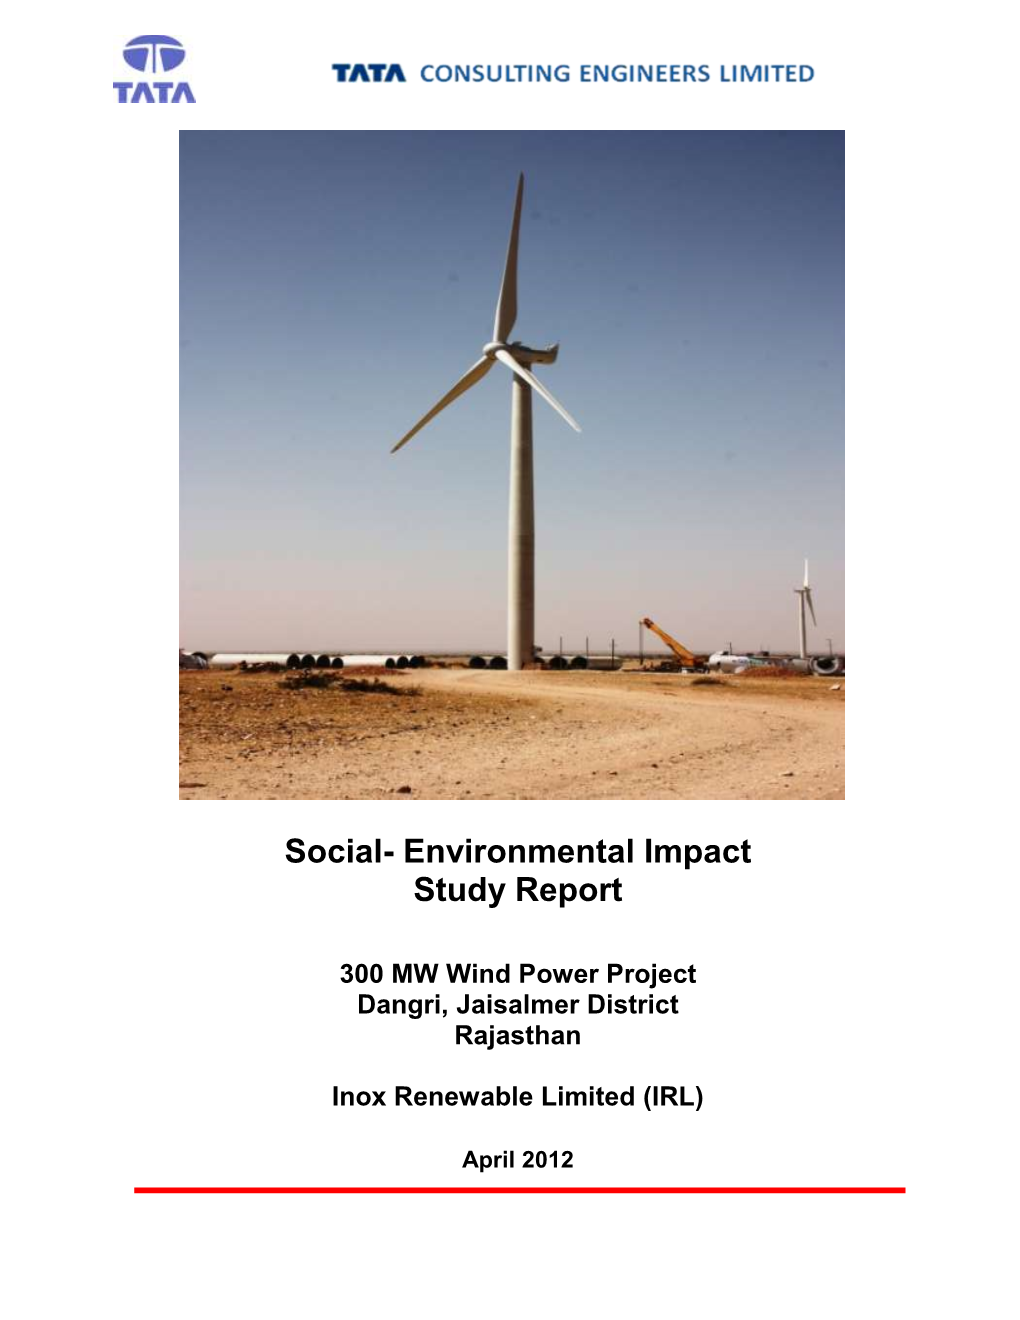 Social- Environmental Impact Study Report 300 MW